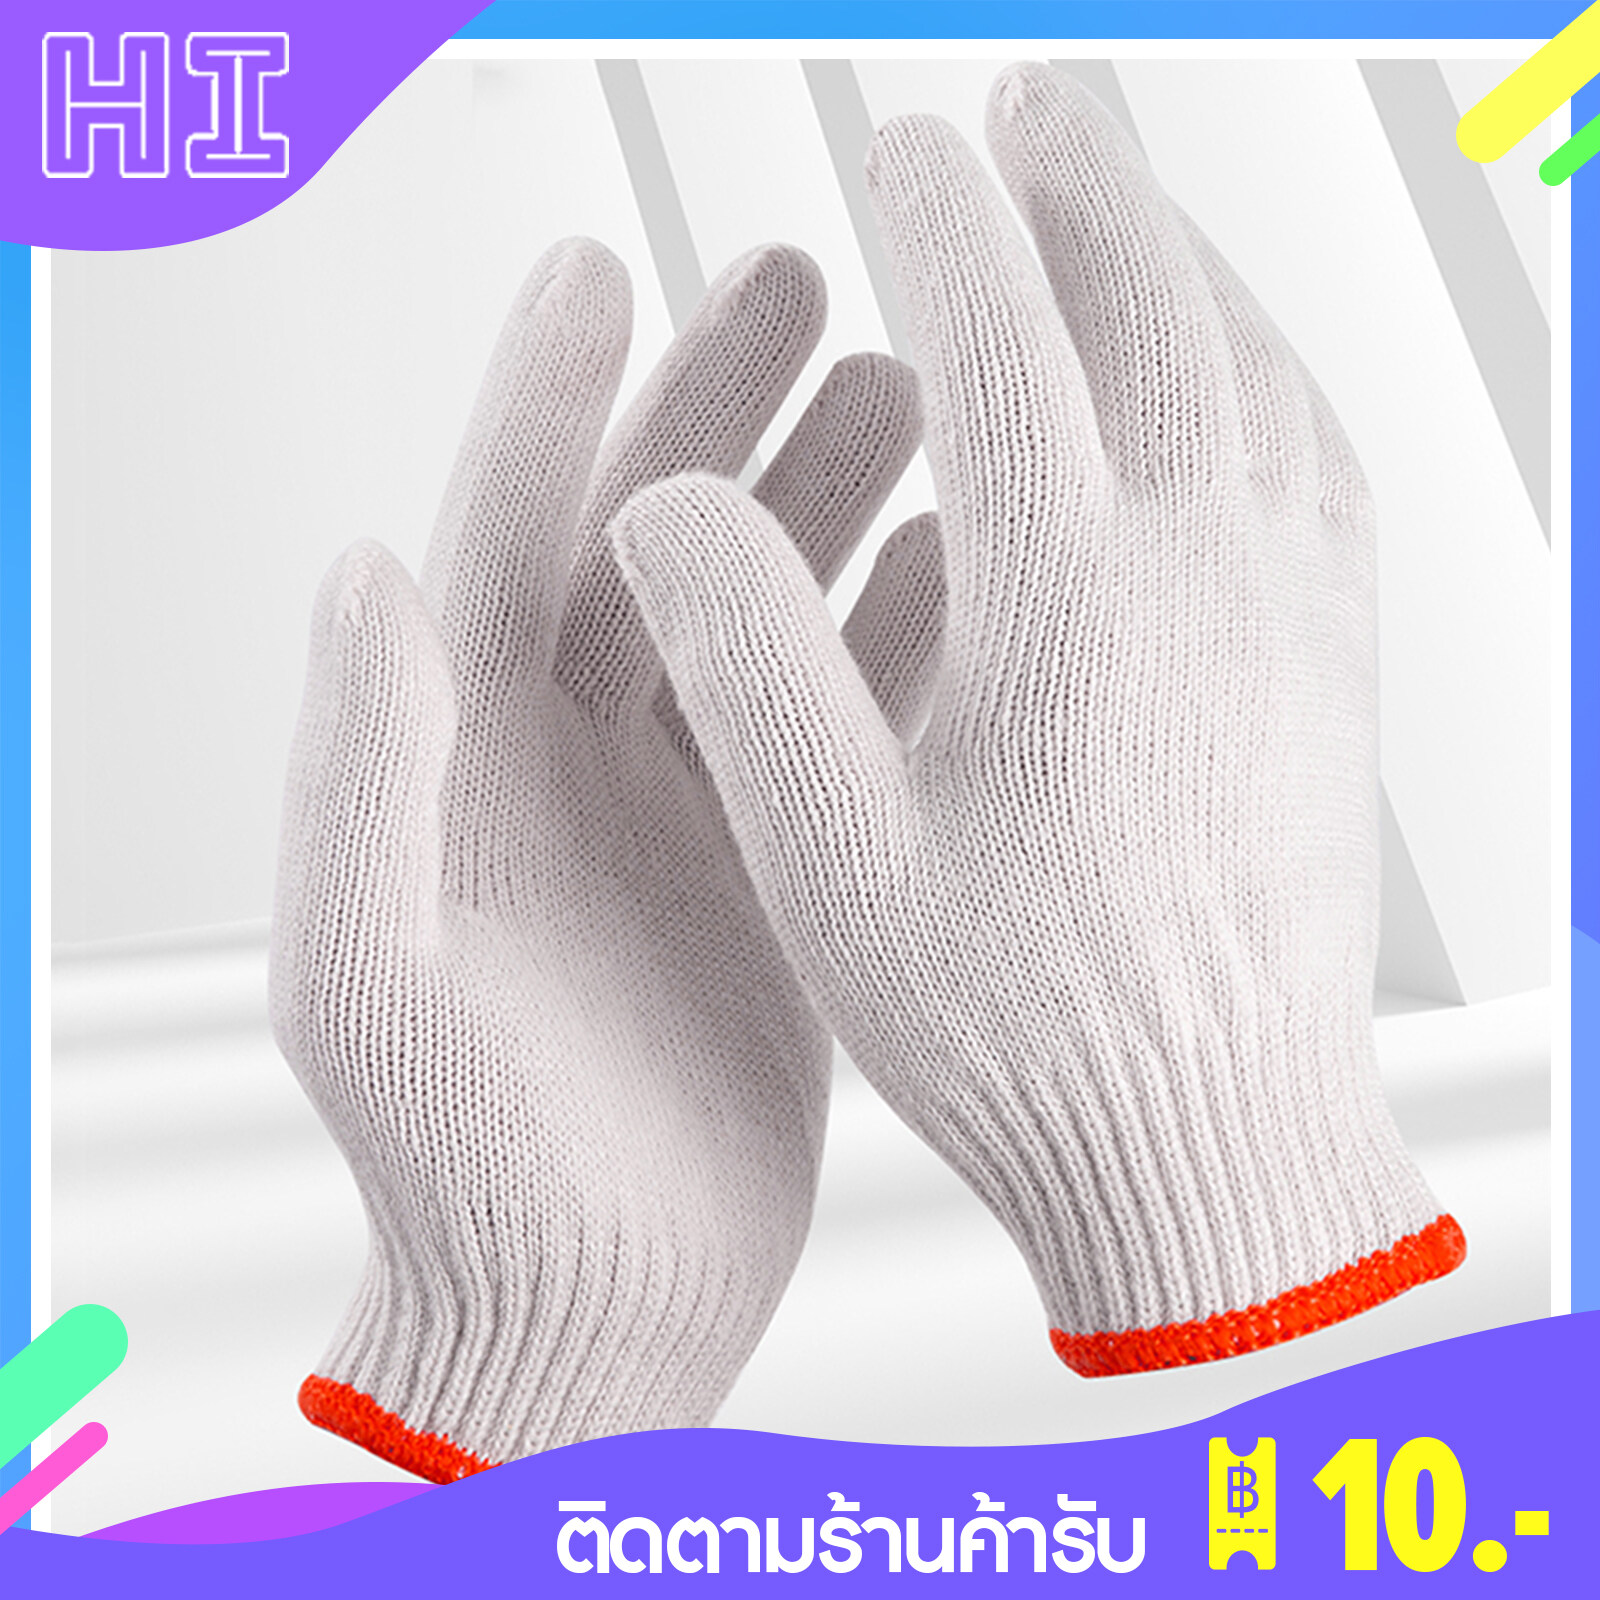 Hifashion ถุงมือประกันแรงงานถุงมือไหมพรม Cotton Yarn Point ถุงมือไซต์พลาสติก